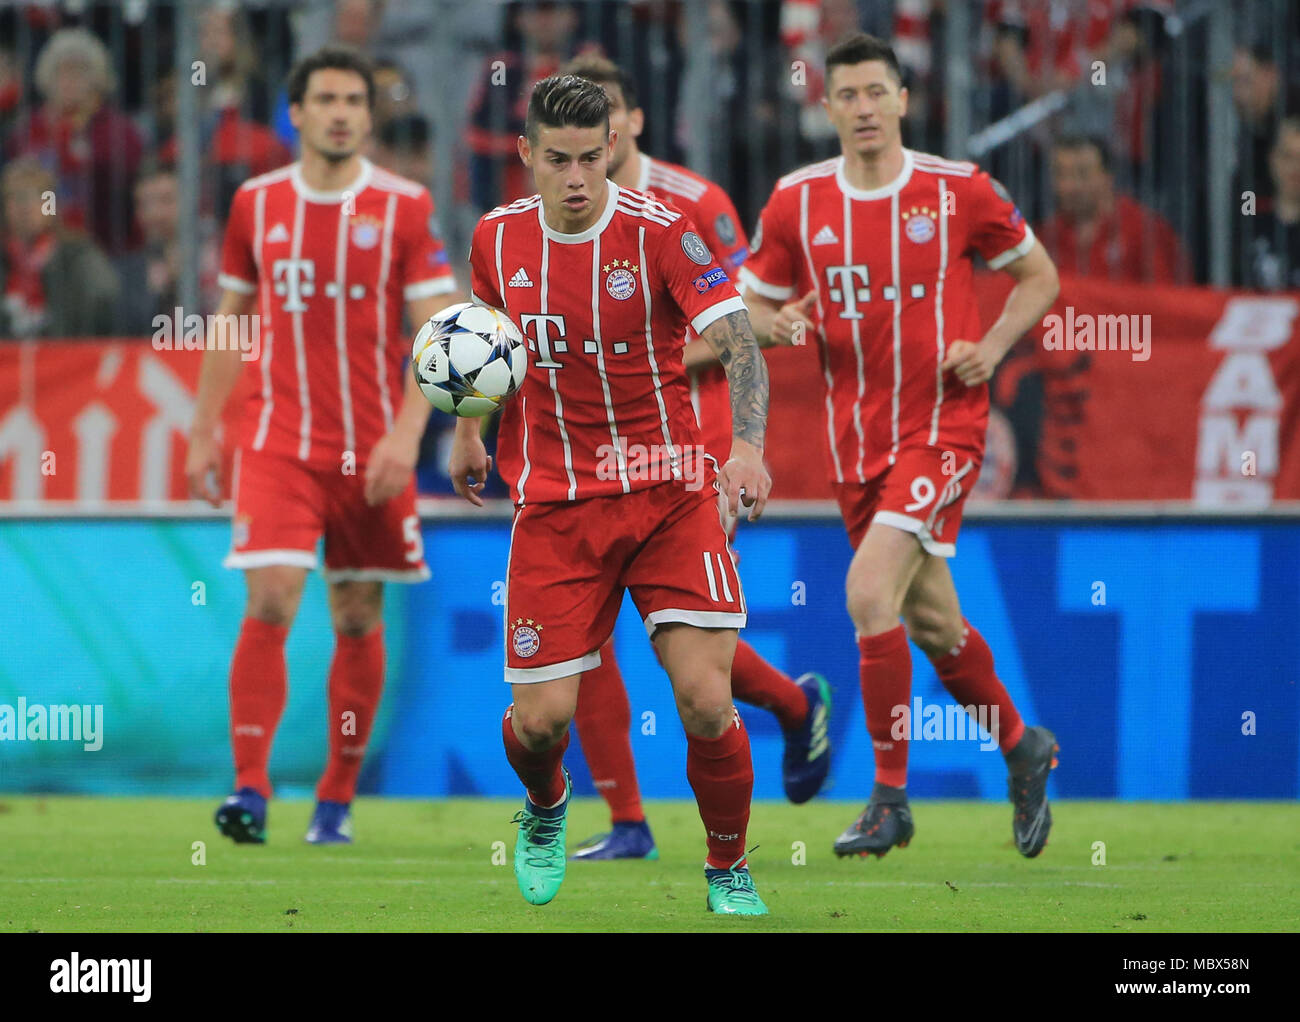 FC Bayern Stockfotografie - Alamy